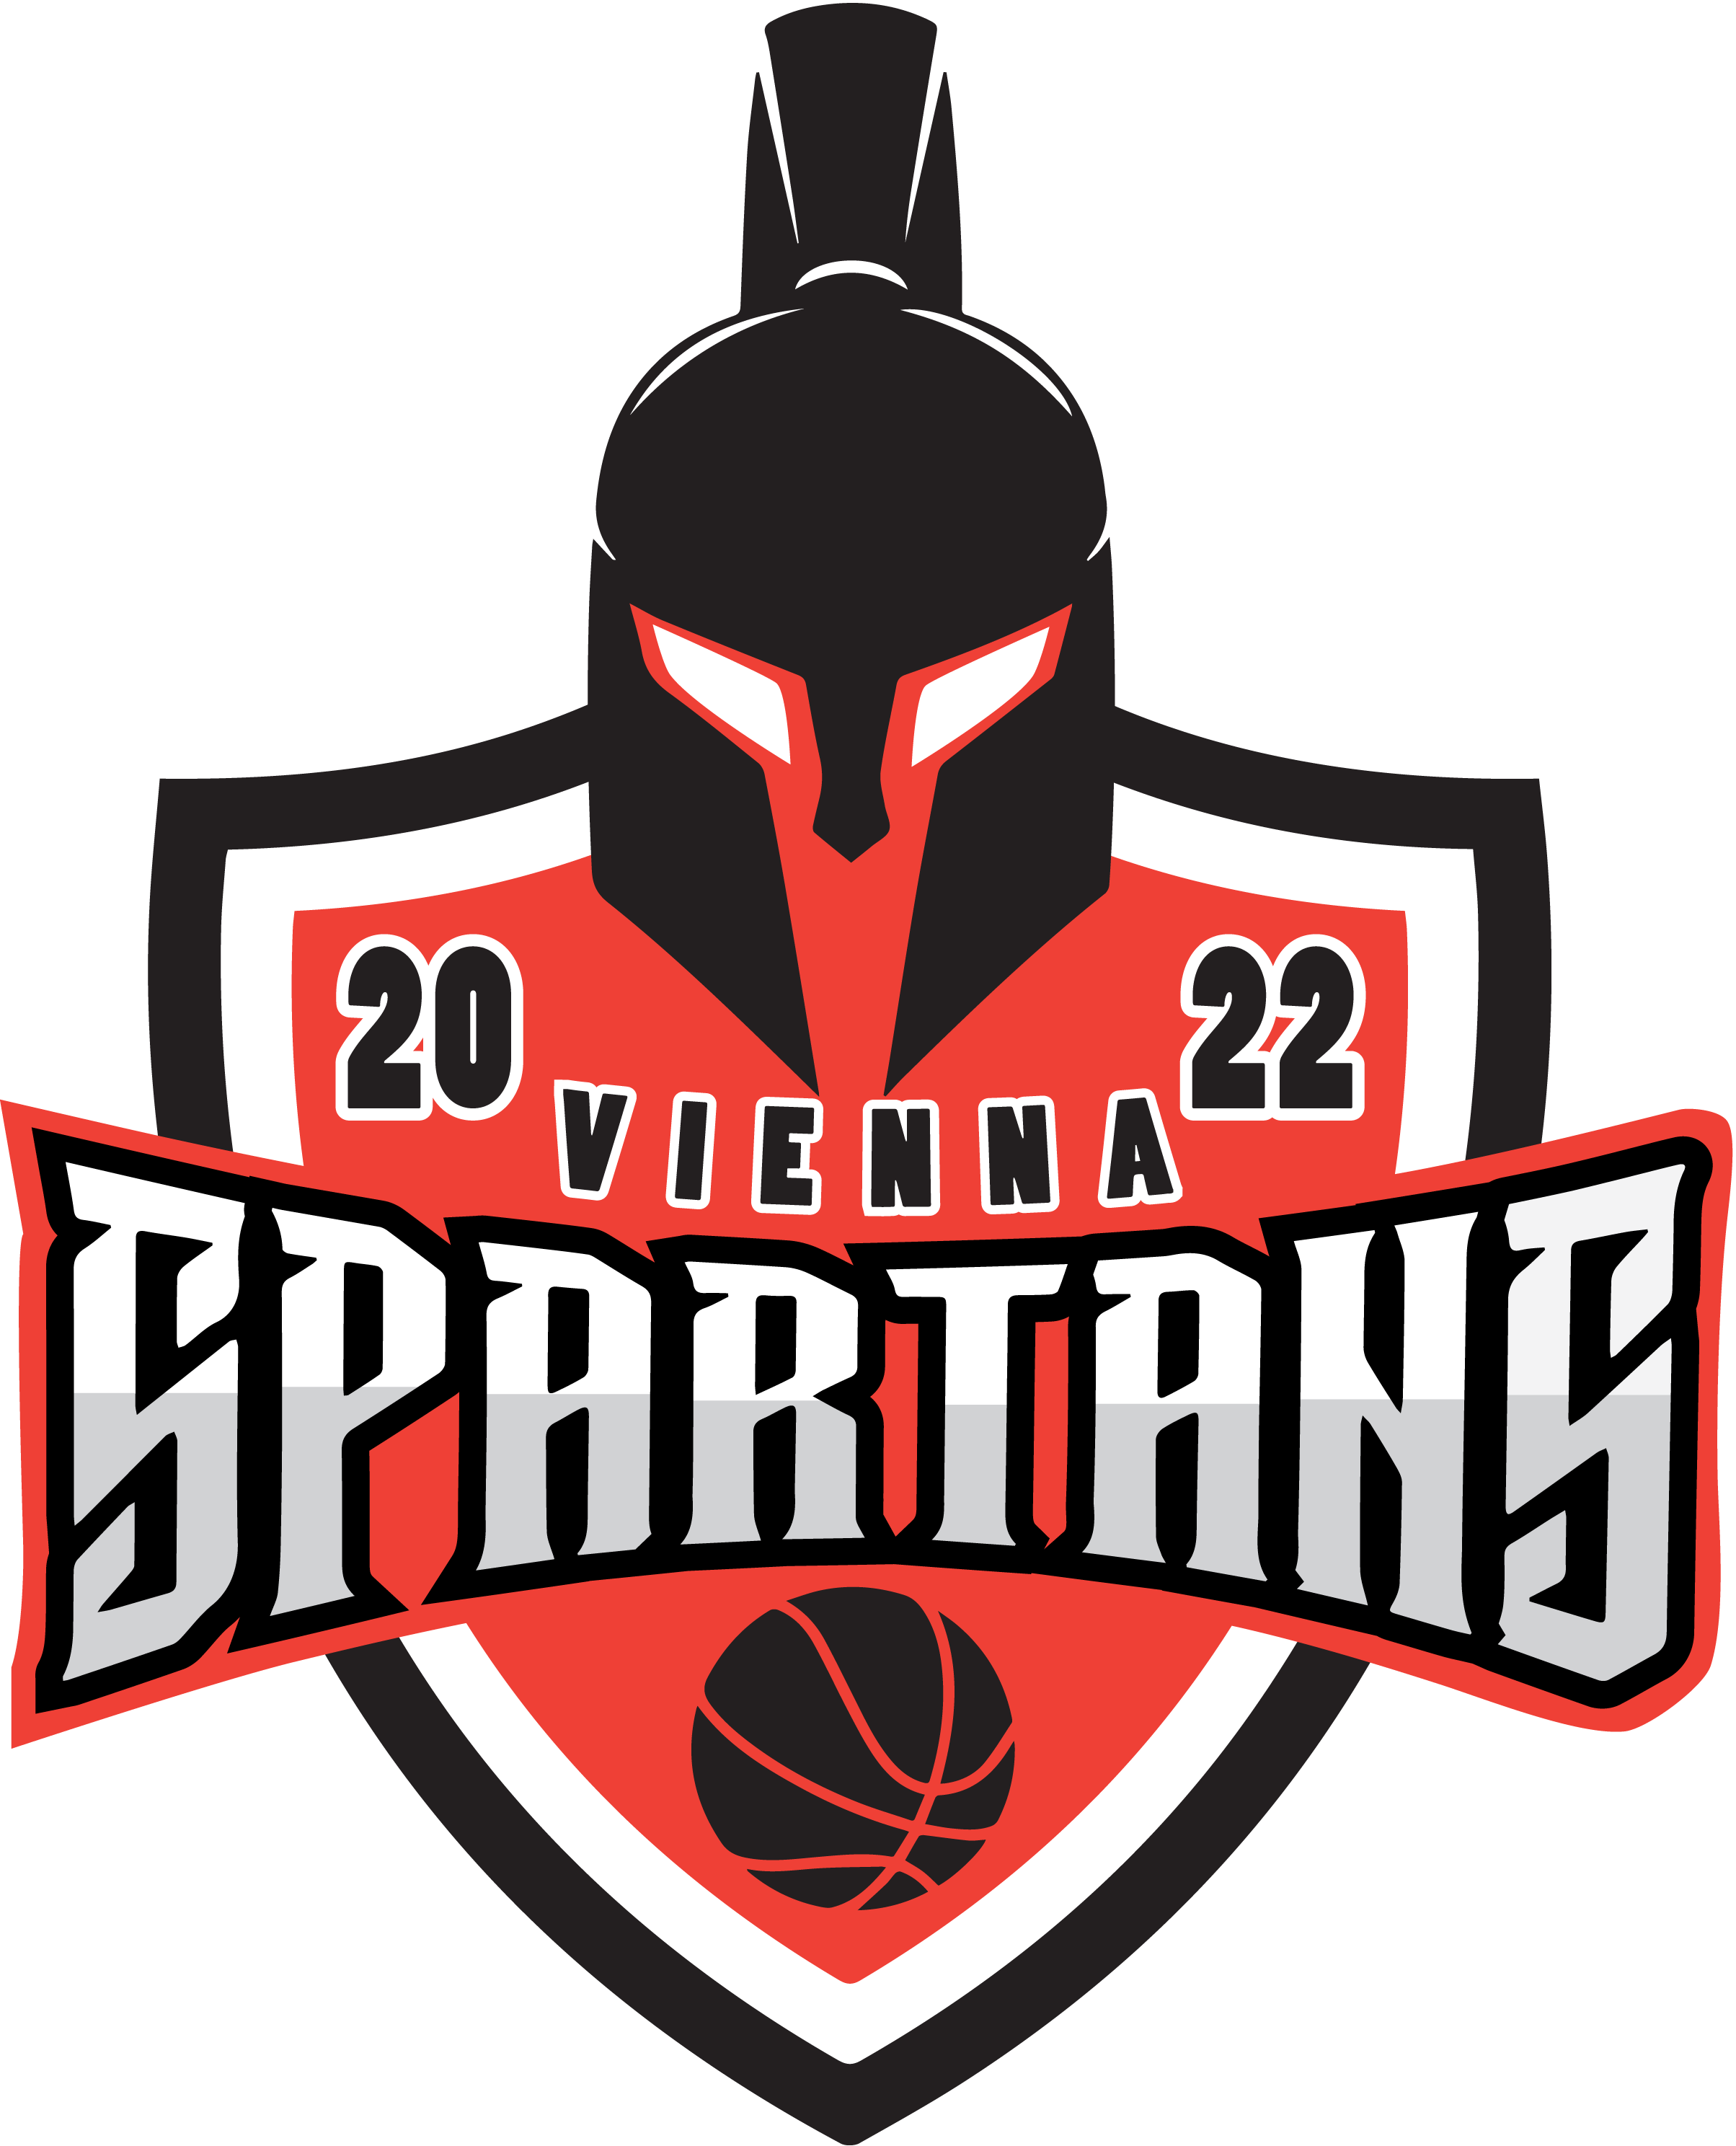 Vienna-spartans_logo-or